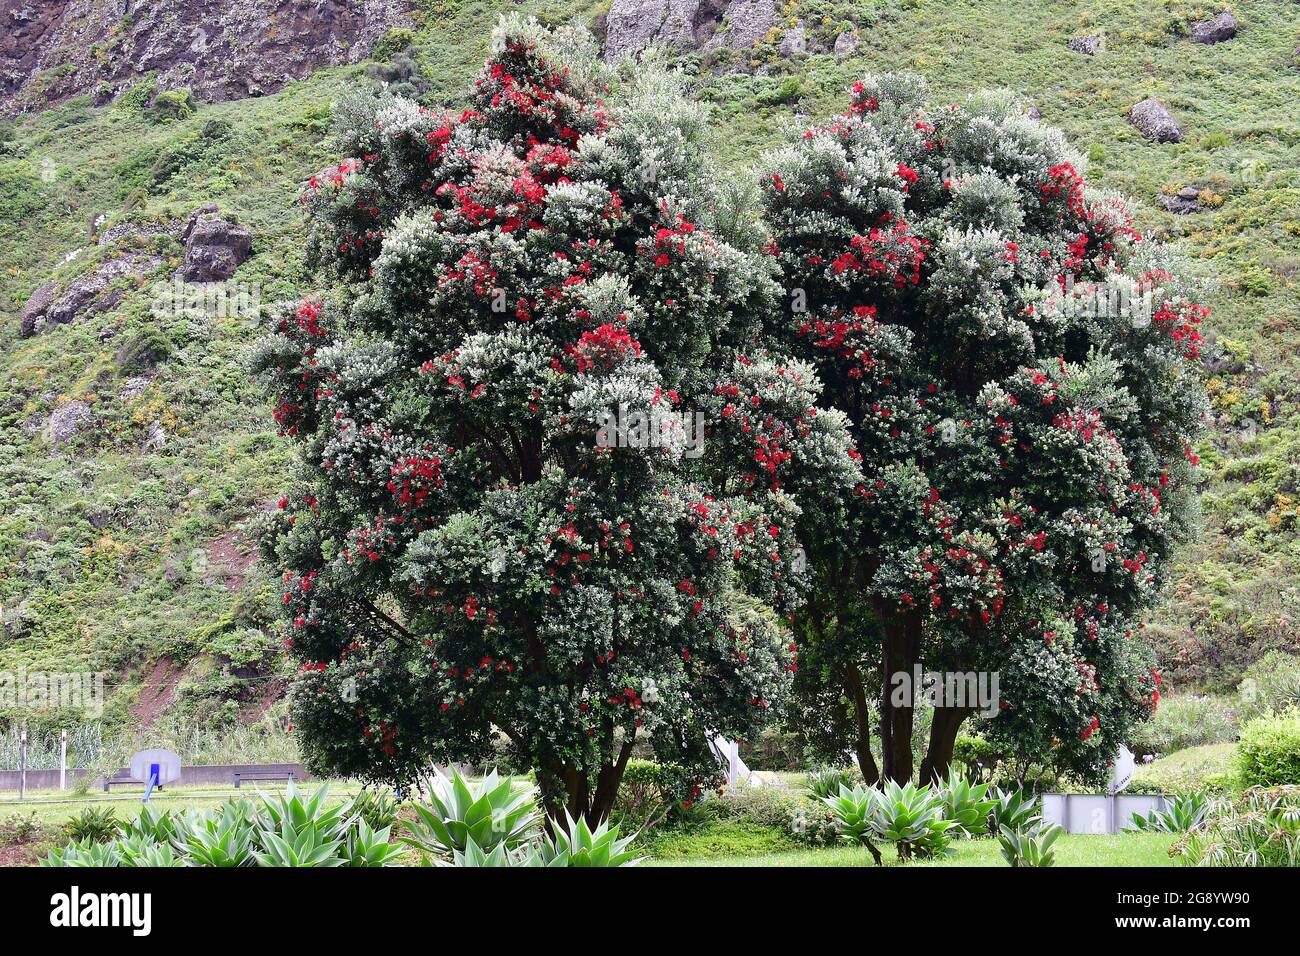 pohutukawa, New Zealand Christmas tree, Metrosideros excelsa, Új-zélandi karácsonyfa, Madeira, Portugal, Europe Stock Photo